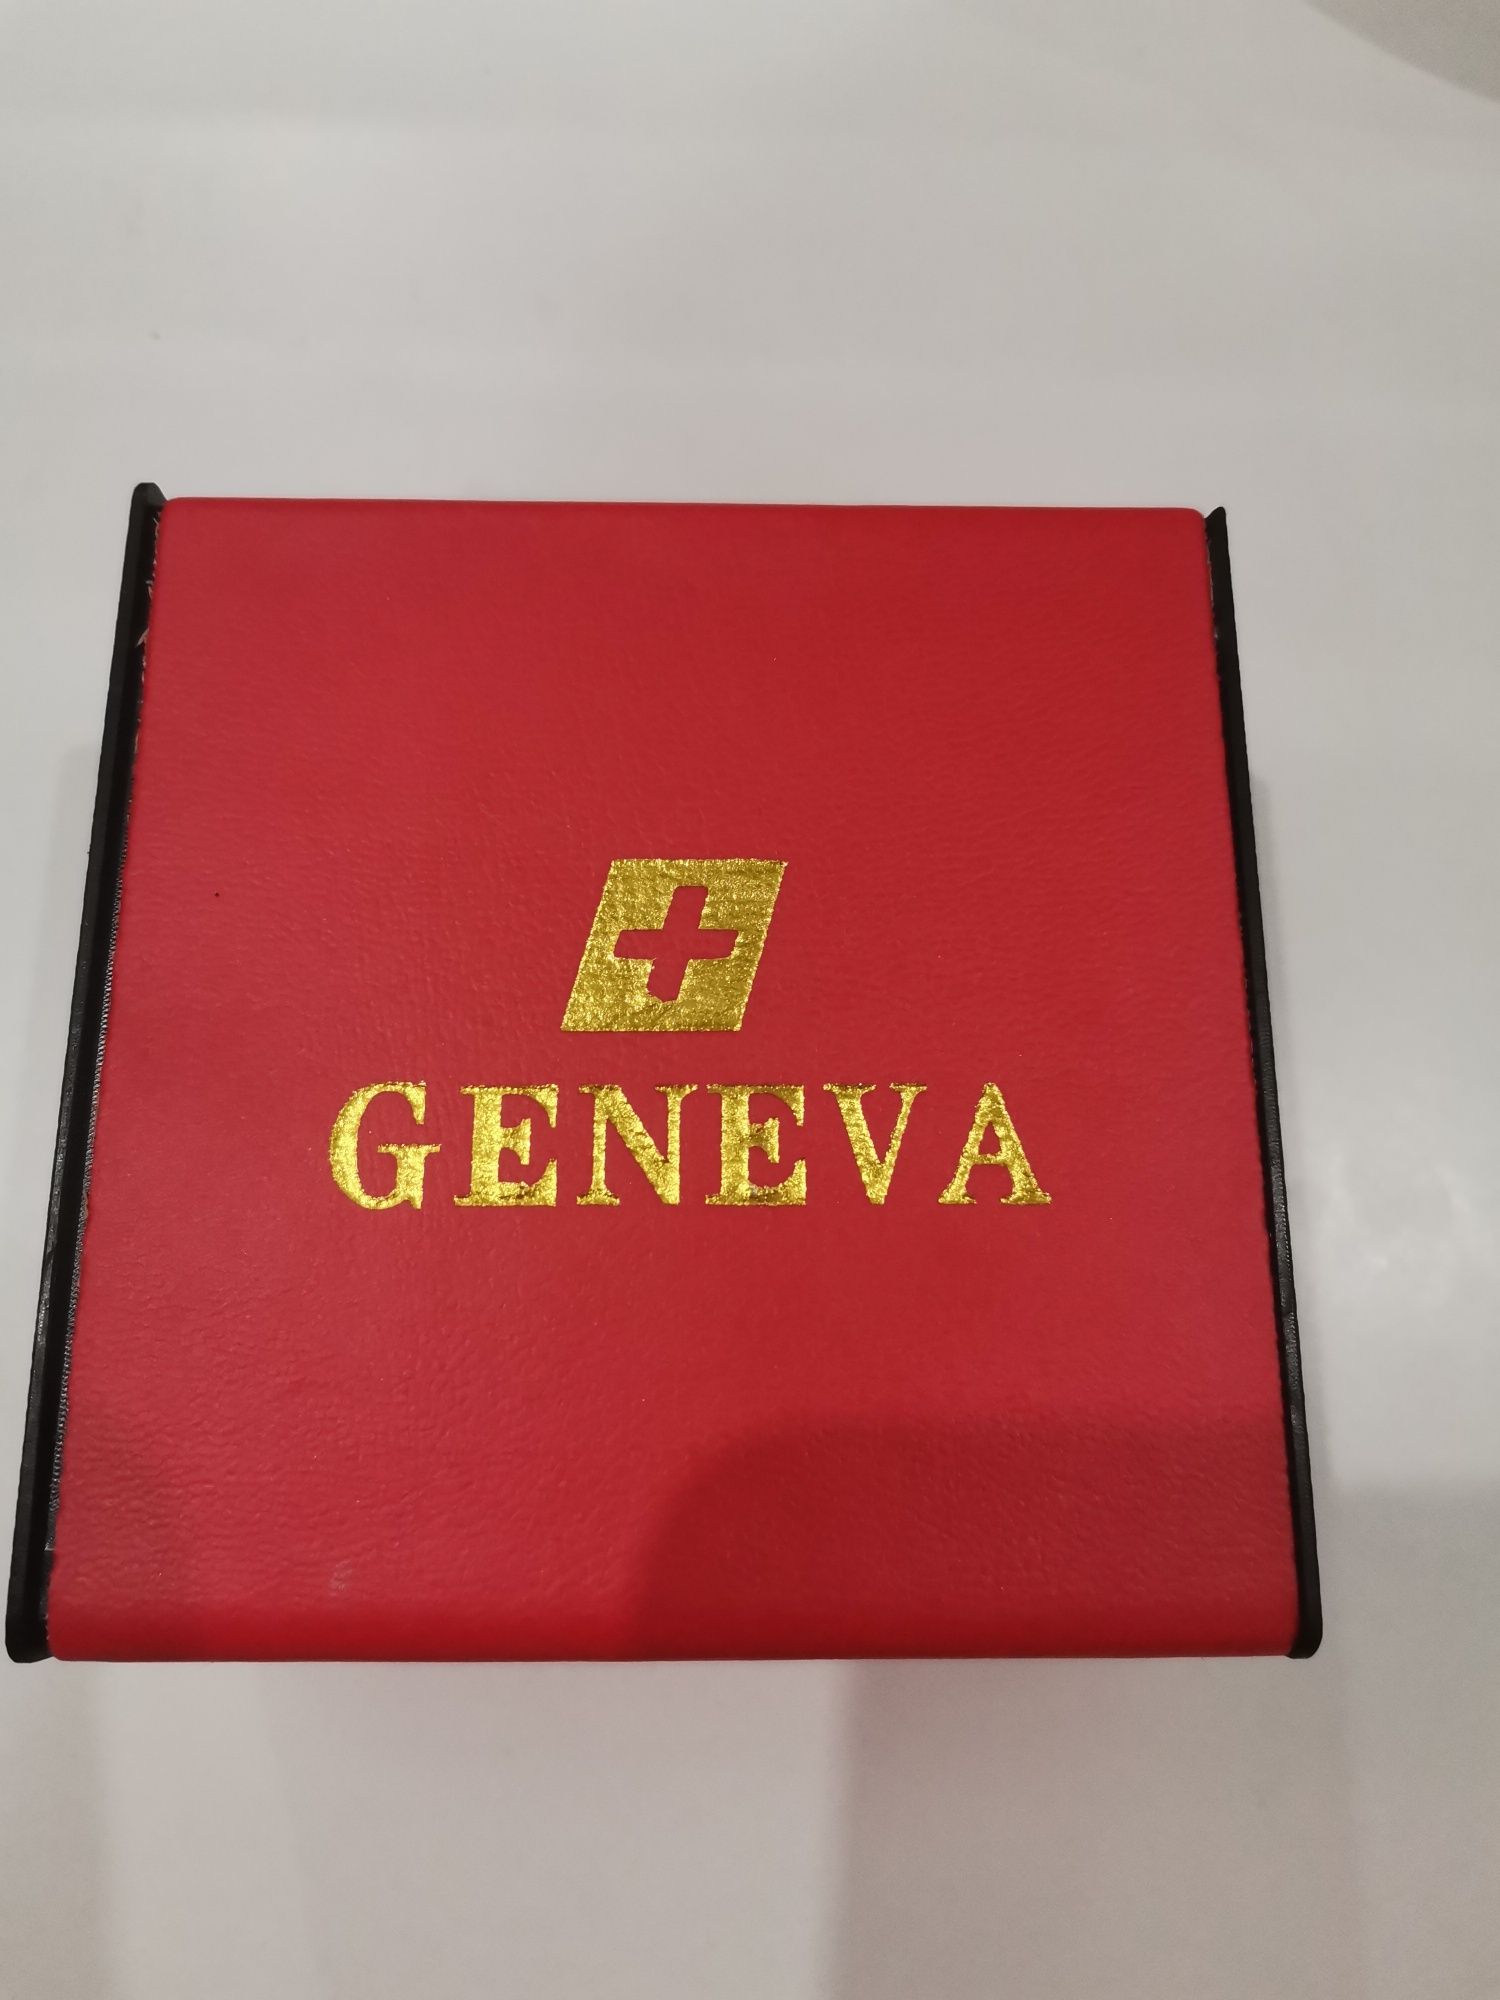 Часовници Geneva